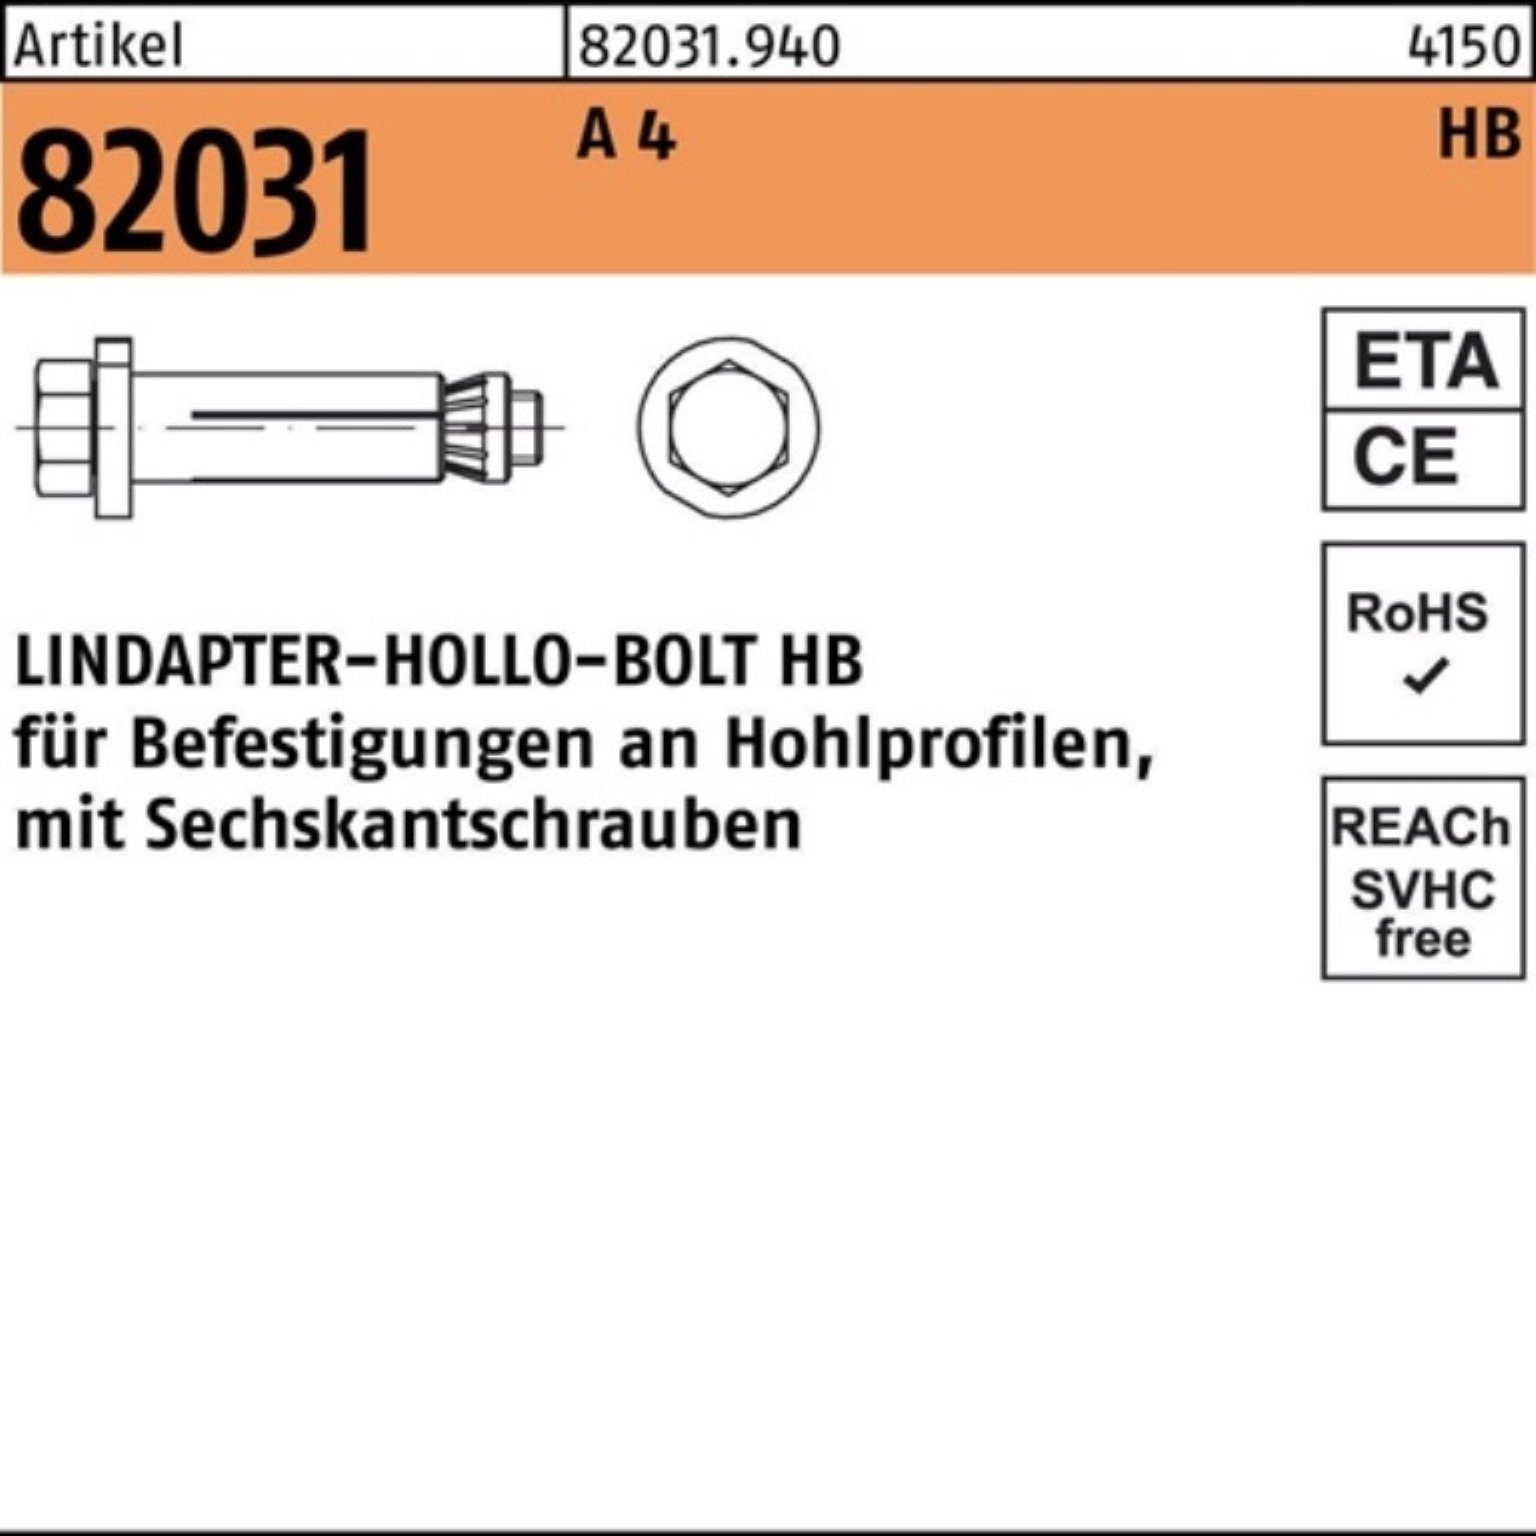 HB (100/50) 6-ktschraube 4 A Pack Hohlraumdübel 1 Hohlraumdübel R 16-2 100er Lindapter 82031